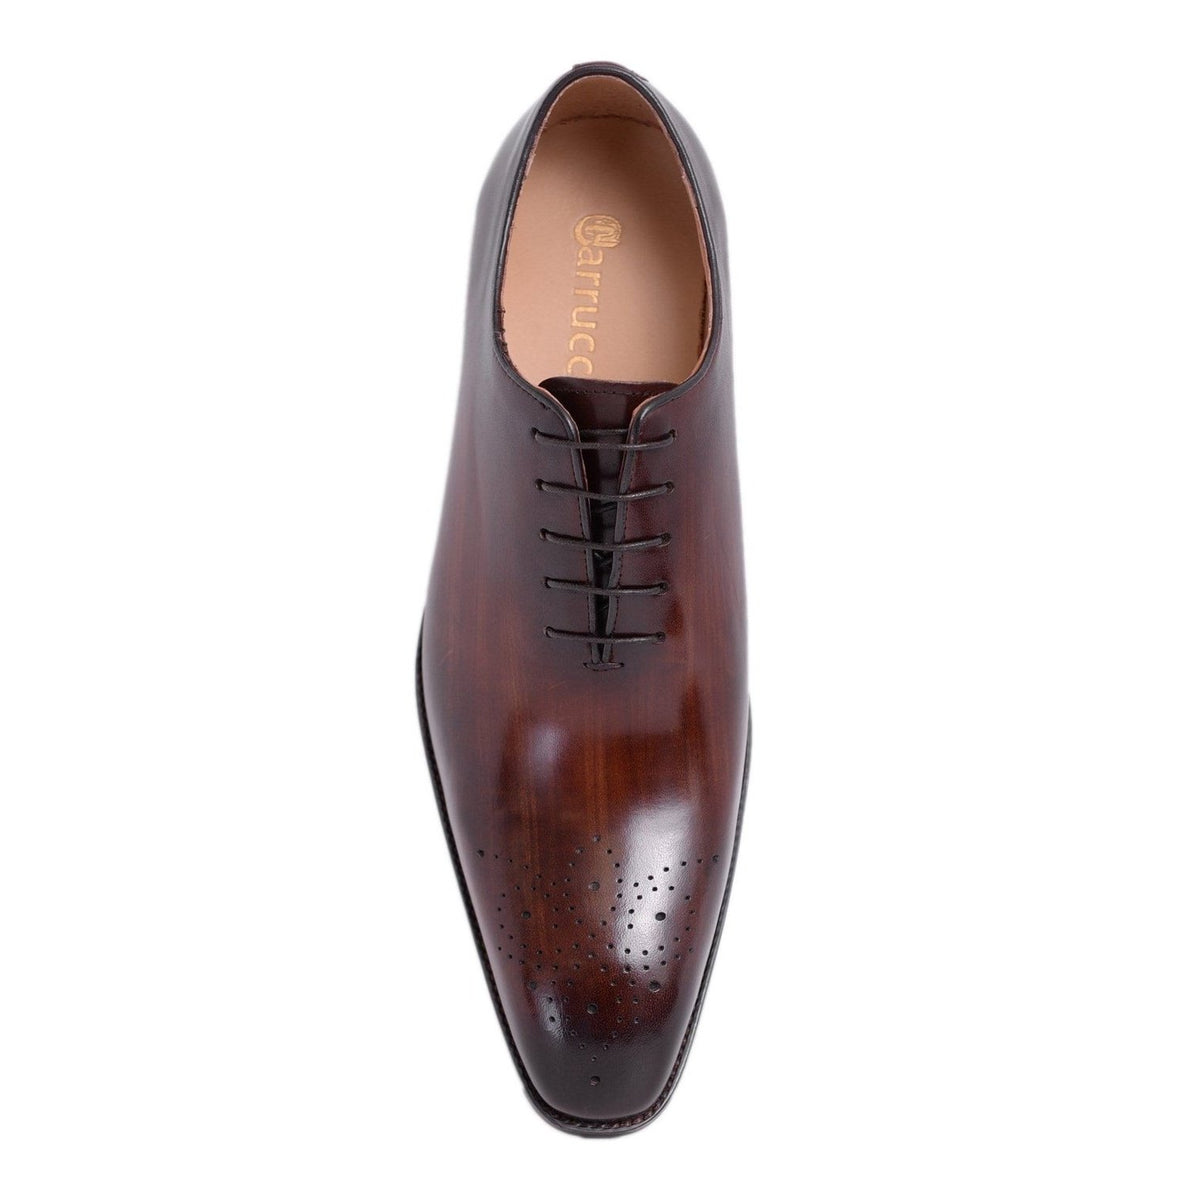 Carrucci Shoes For Amazon Carrucci Mens Brown Chestnut Whole Cut Oxford Leather Dress Shoes